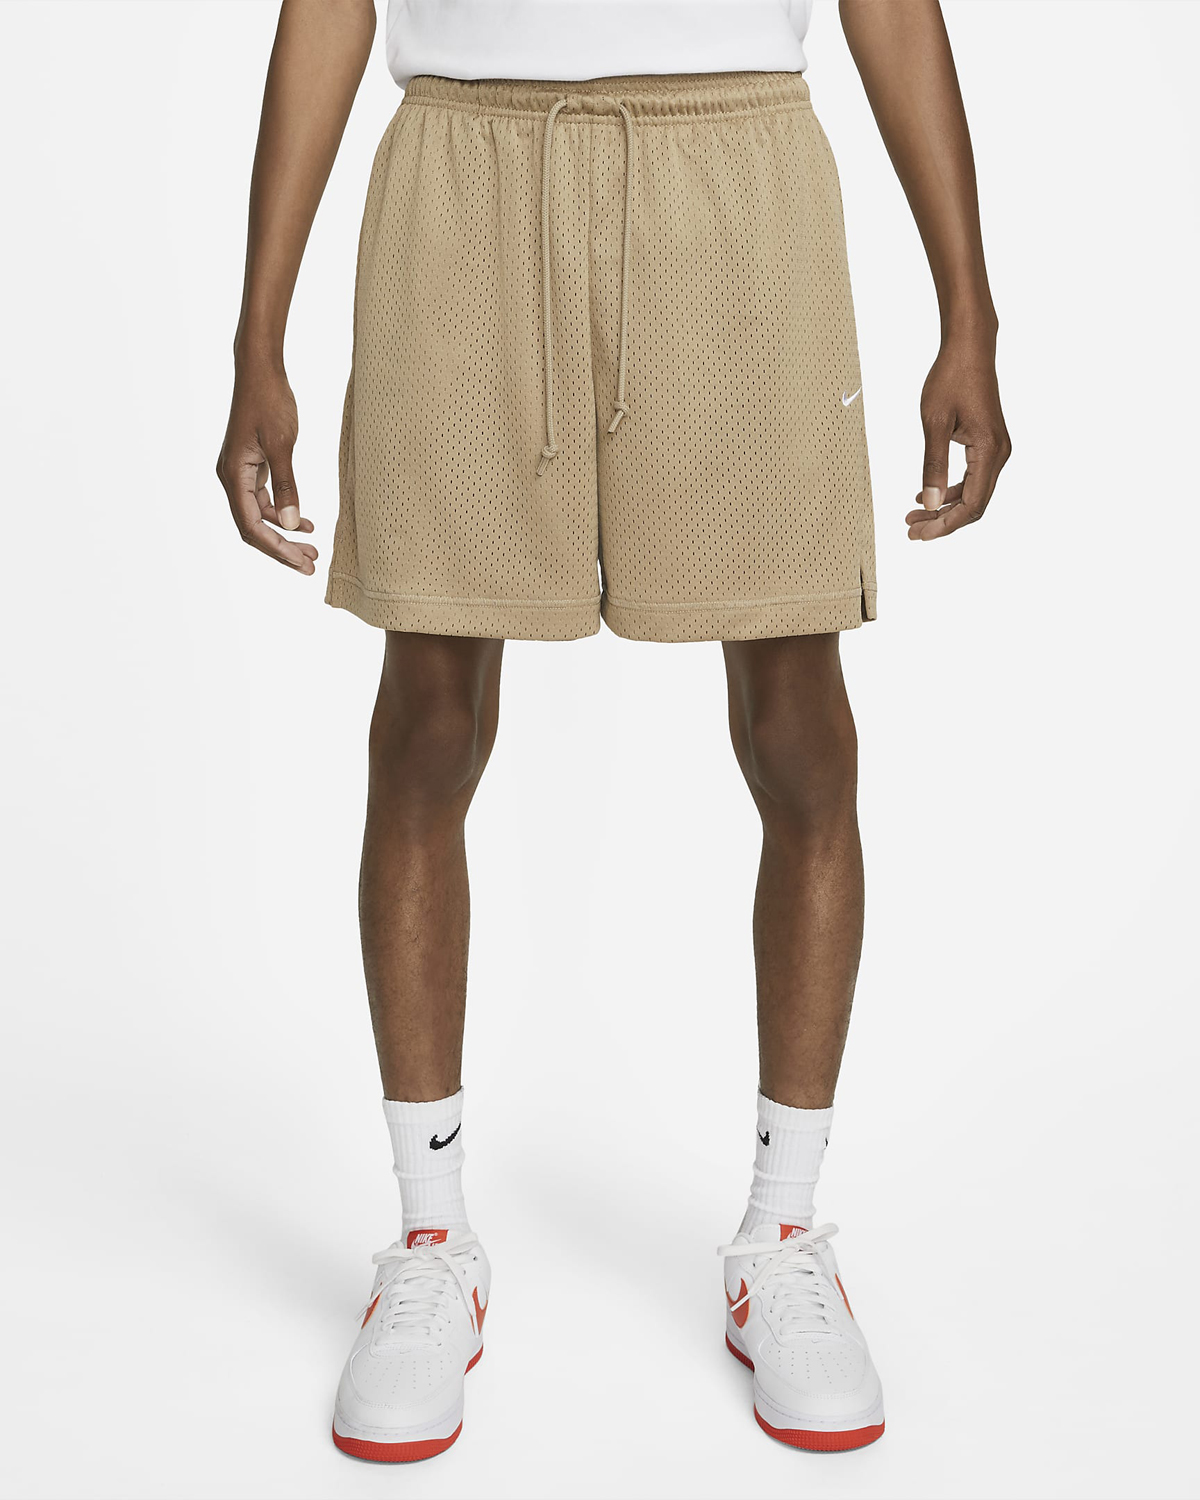 Nike-Sportswear-Authentic-Mesh-Shorts-Khaki